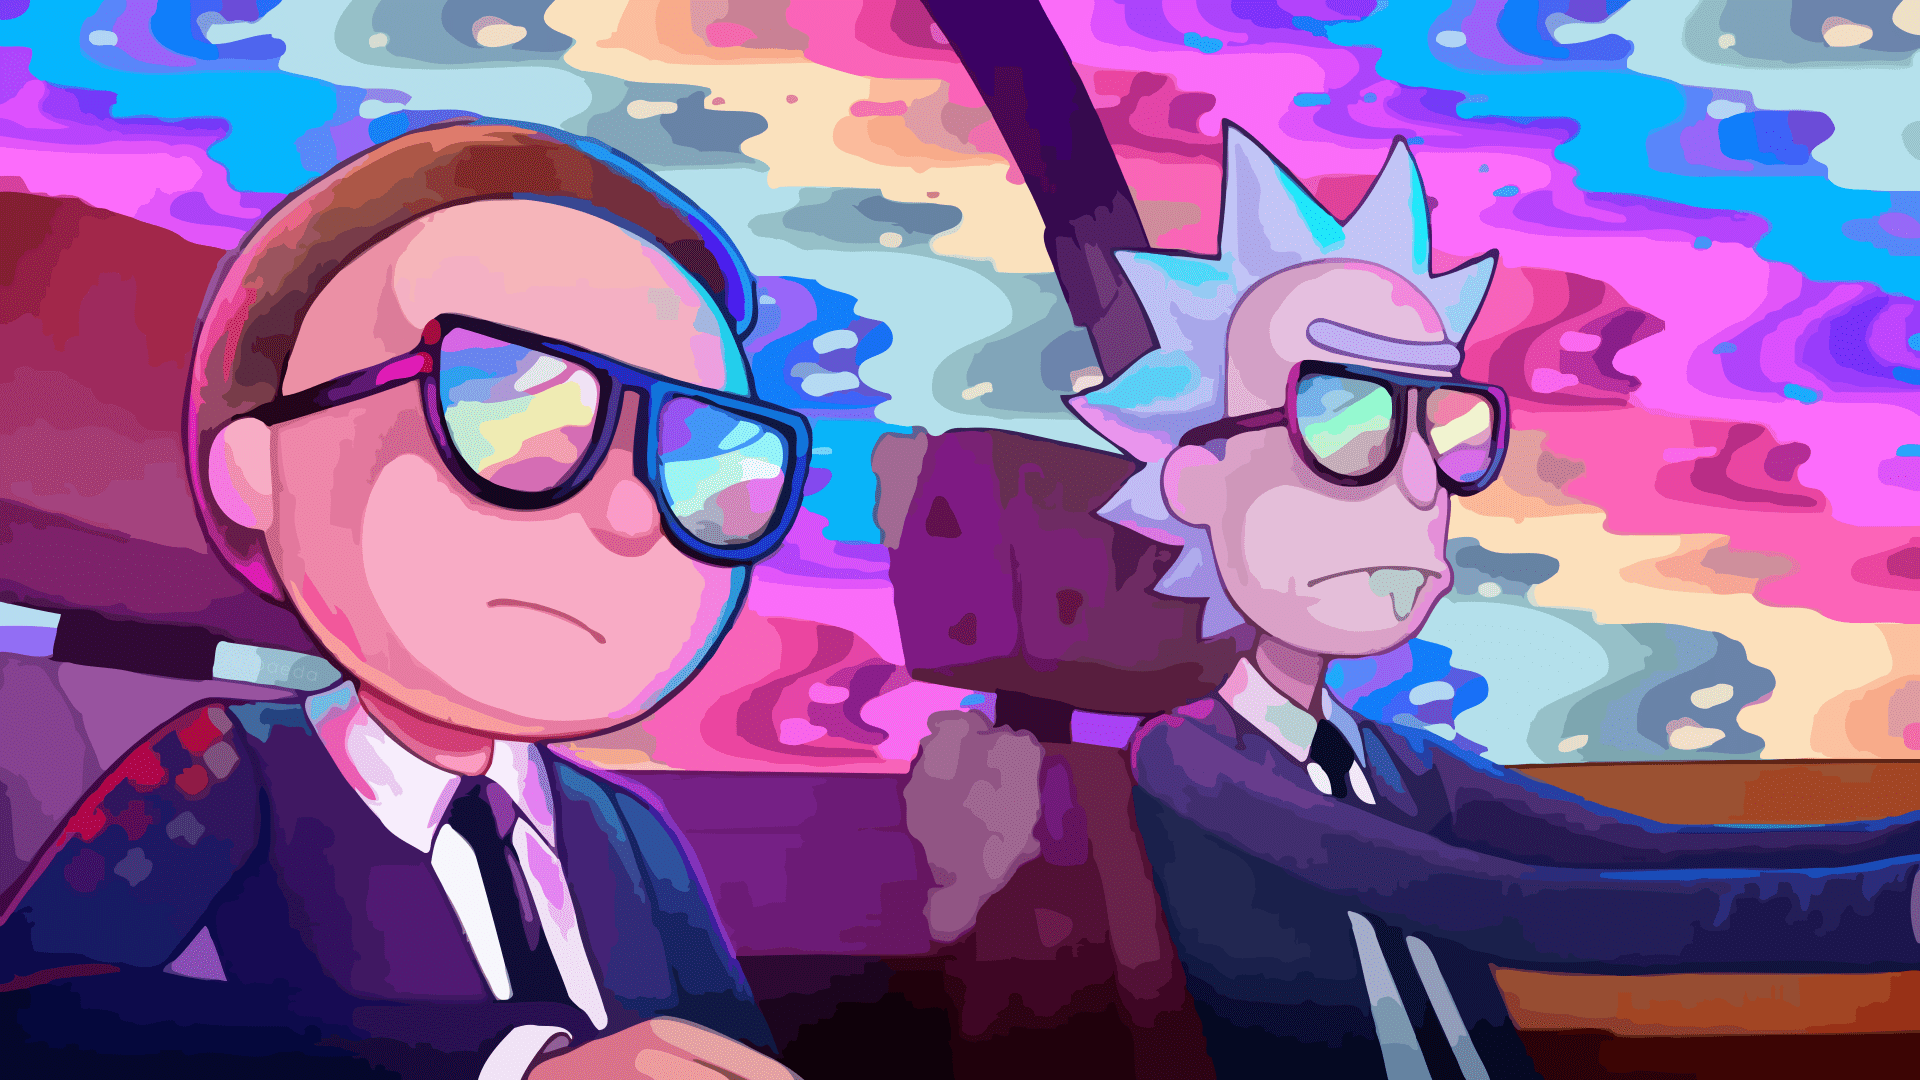 Rick and Morty Wallpaper - NawPic